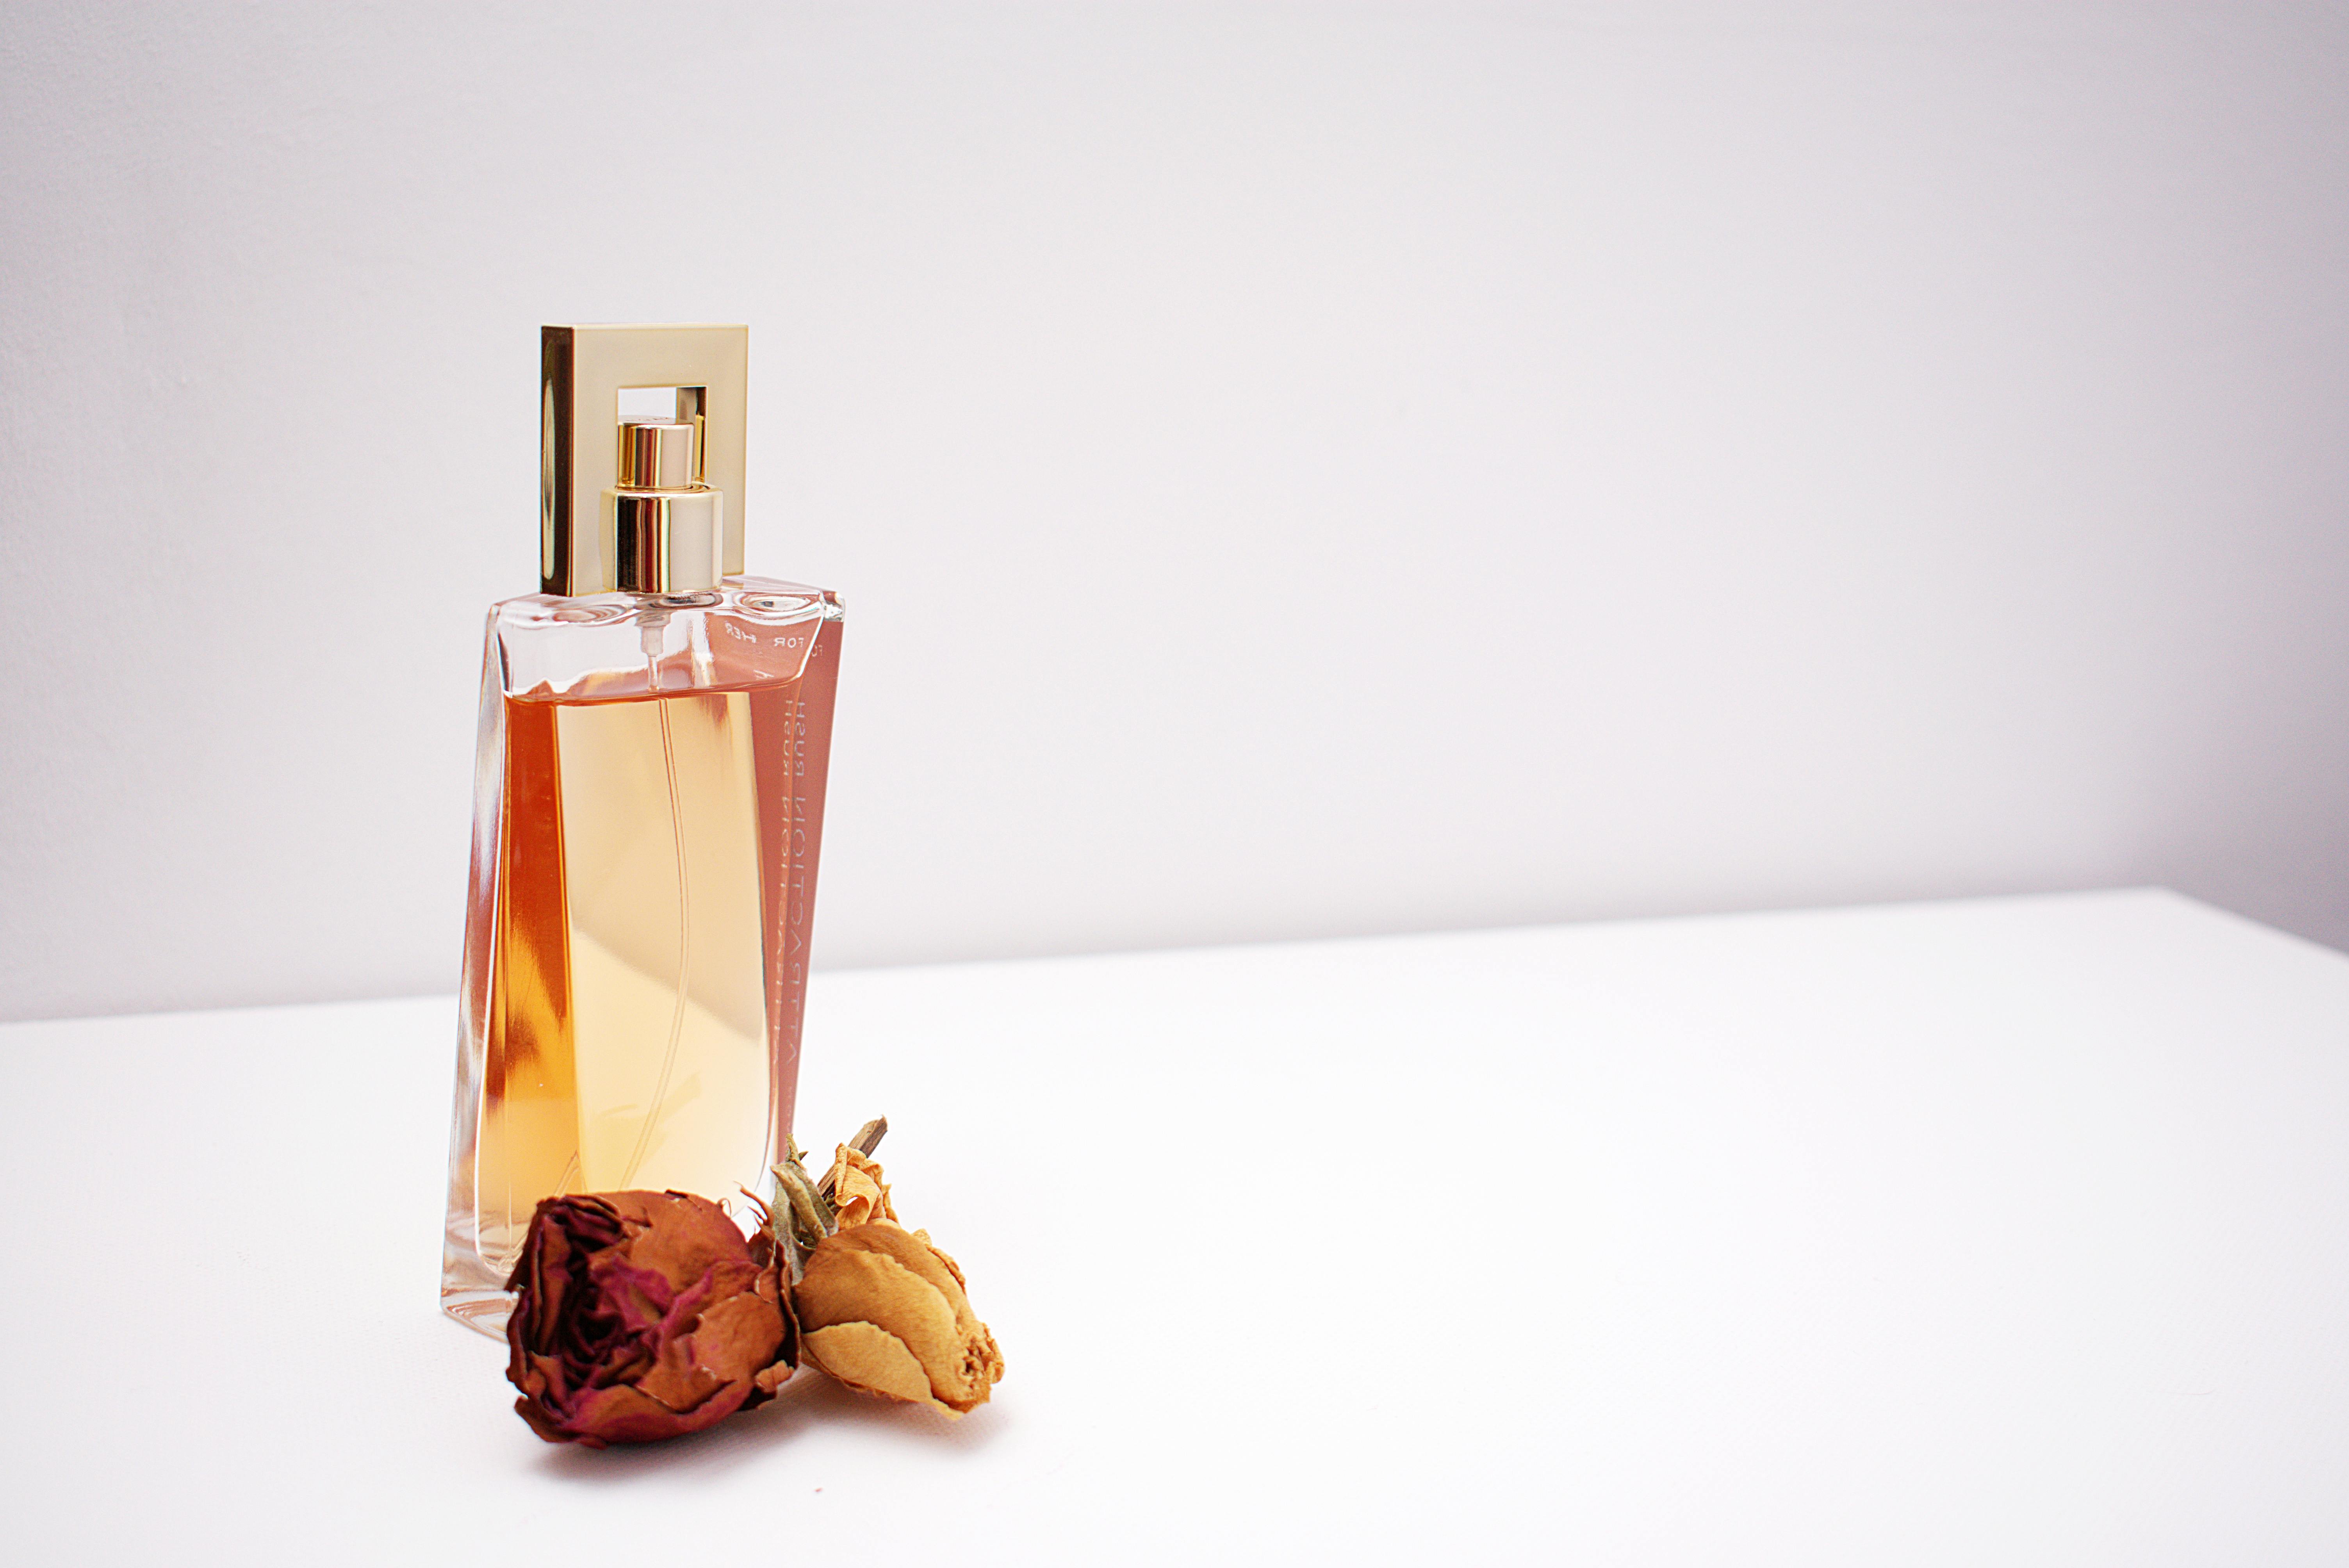 Perfume Bottle on Stone Podium - a Royalty Free Stock Photo from Photocase